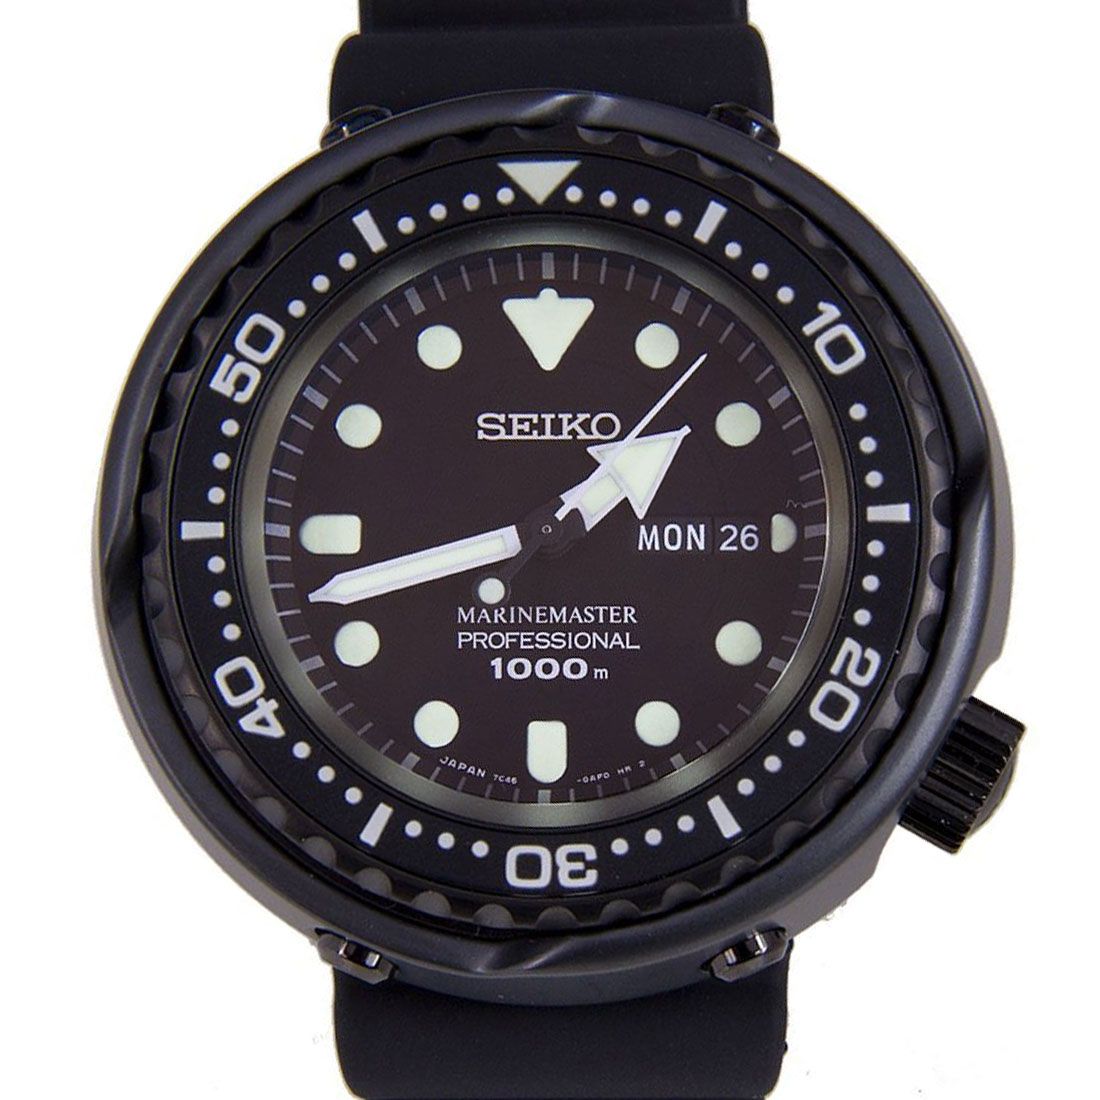 Seiko Prospex Marine Master JDM Scuba Divers Watch SBBN025 -Seiko